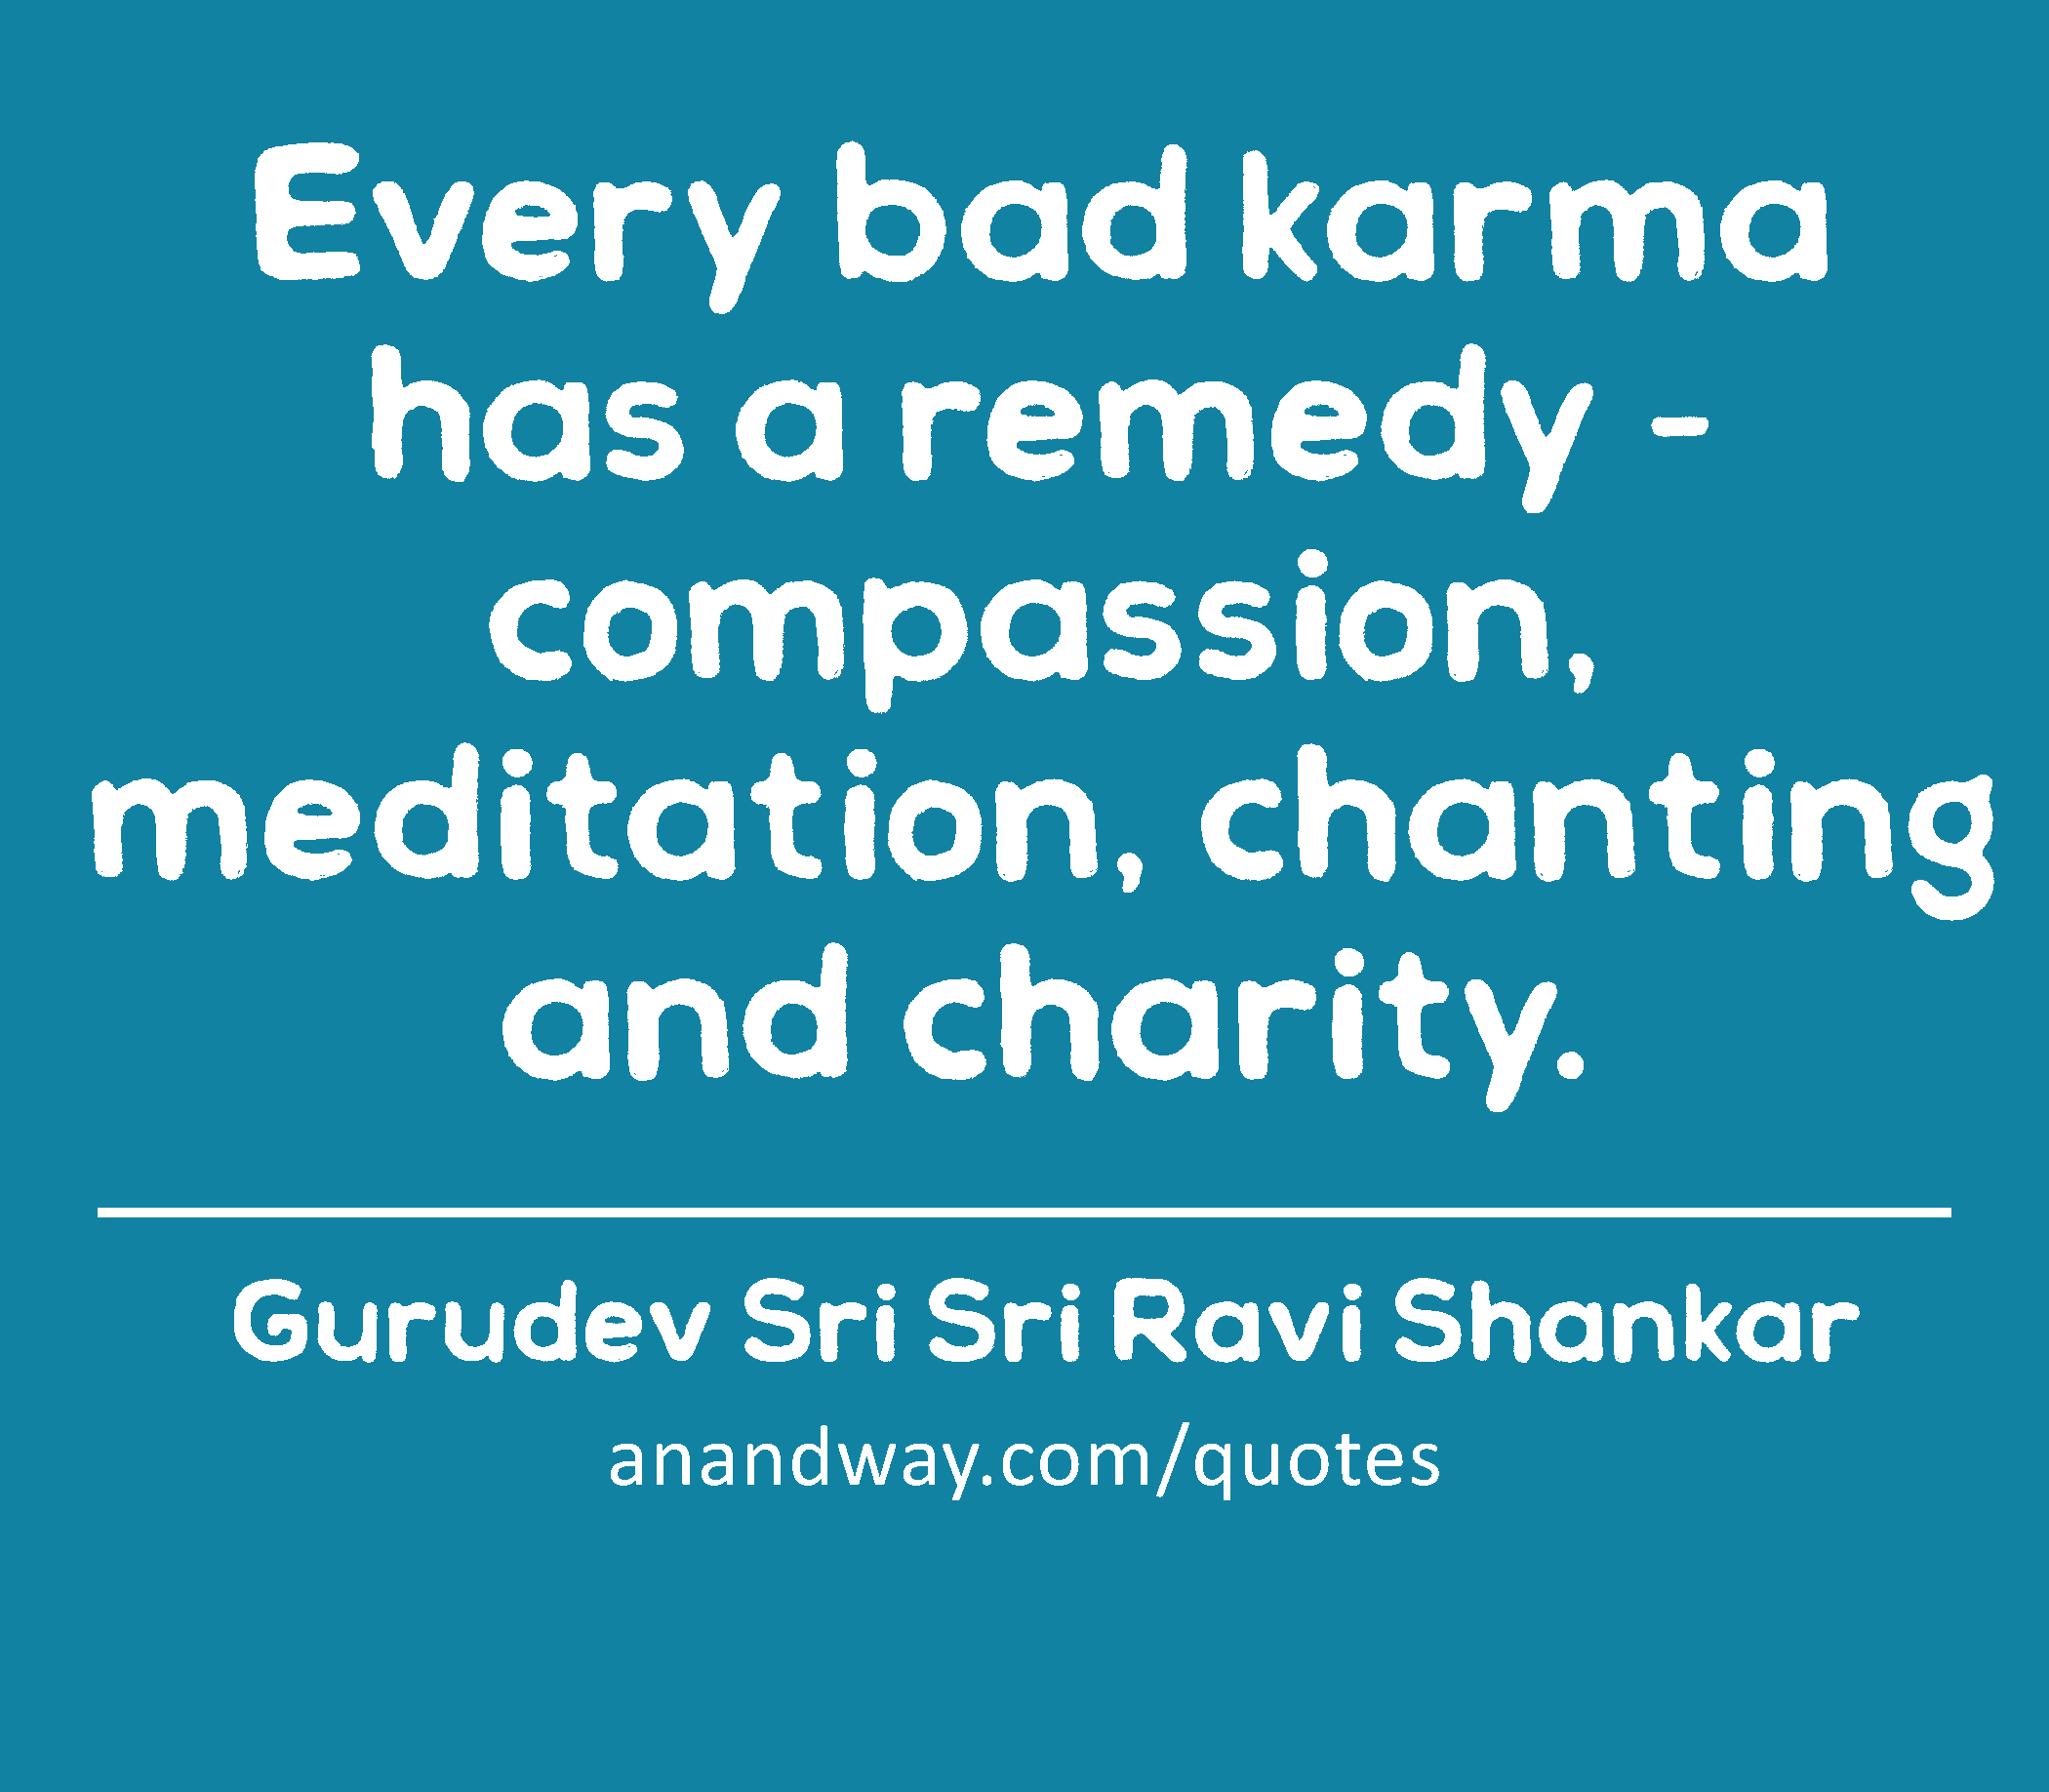 Every bad karma has a remedy - compassion, meditation, chanting and charity. 
 -Gurudev Sri Sri Ravi Shankar